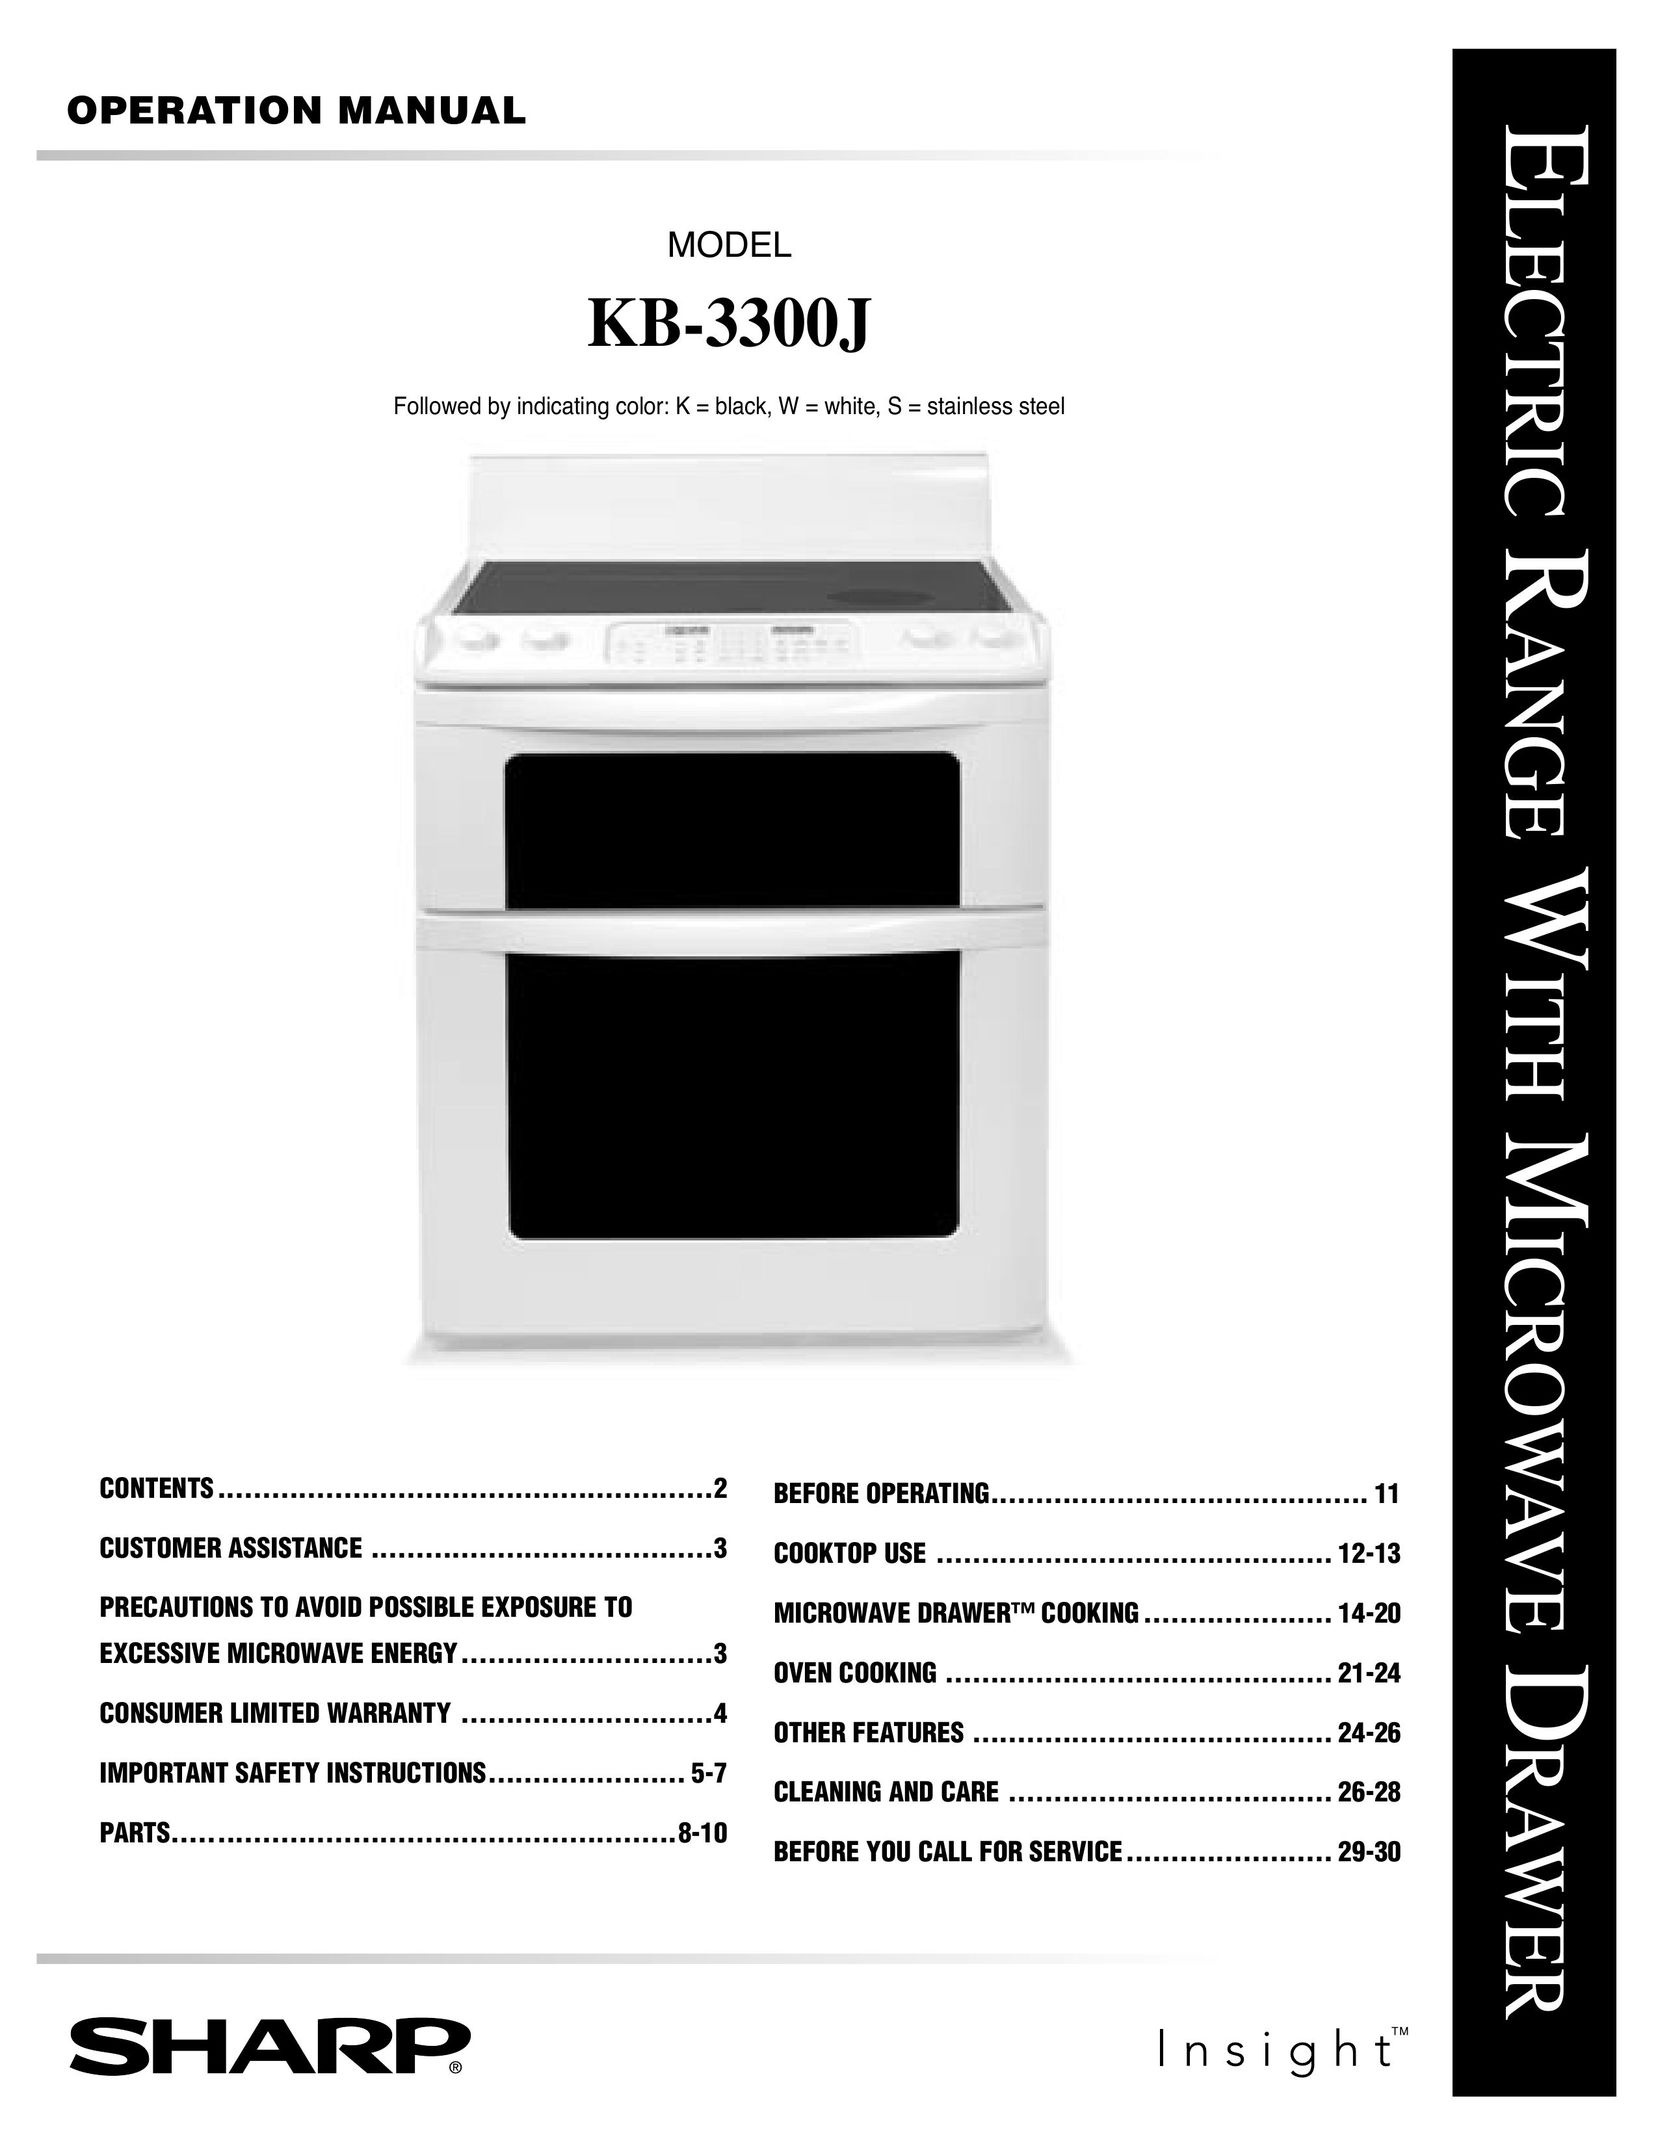 Sharp KB-3300JK Range User Manual